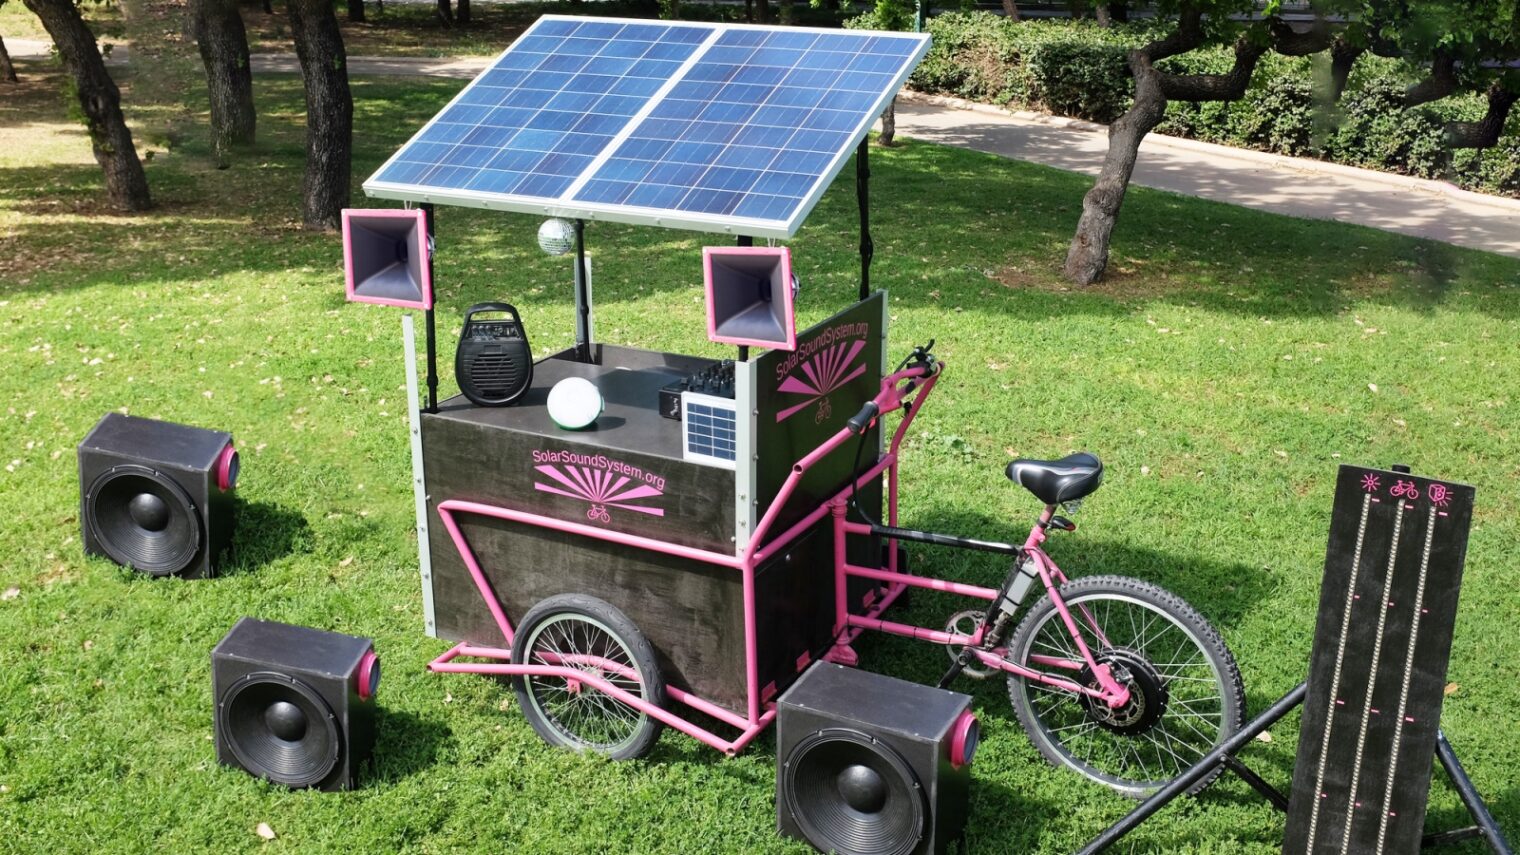 SolarSoundSystem runs on sun- and people-power. Photo: courtesy